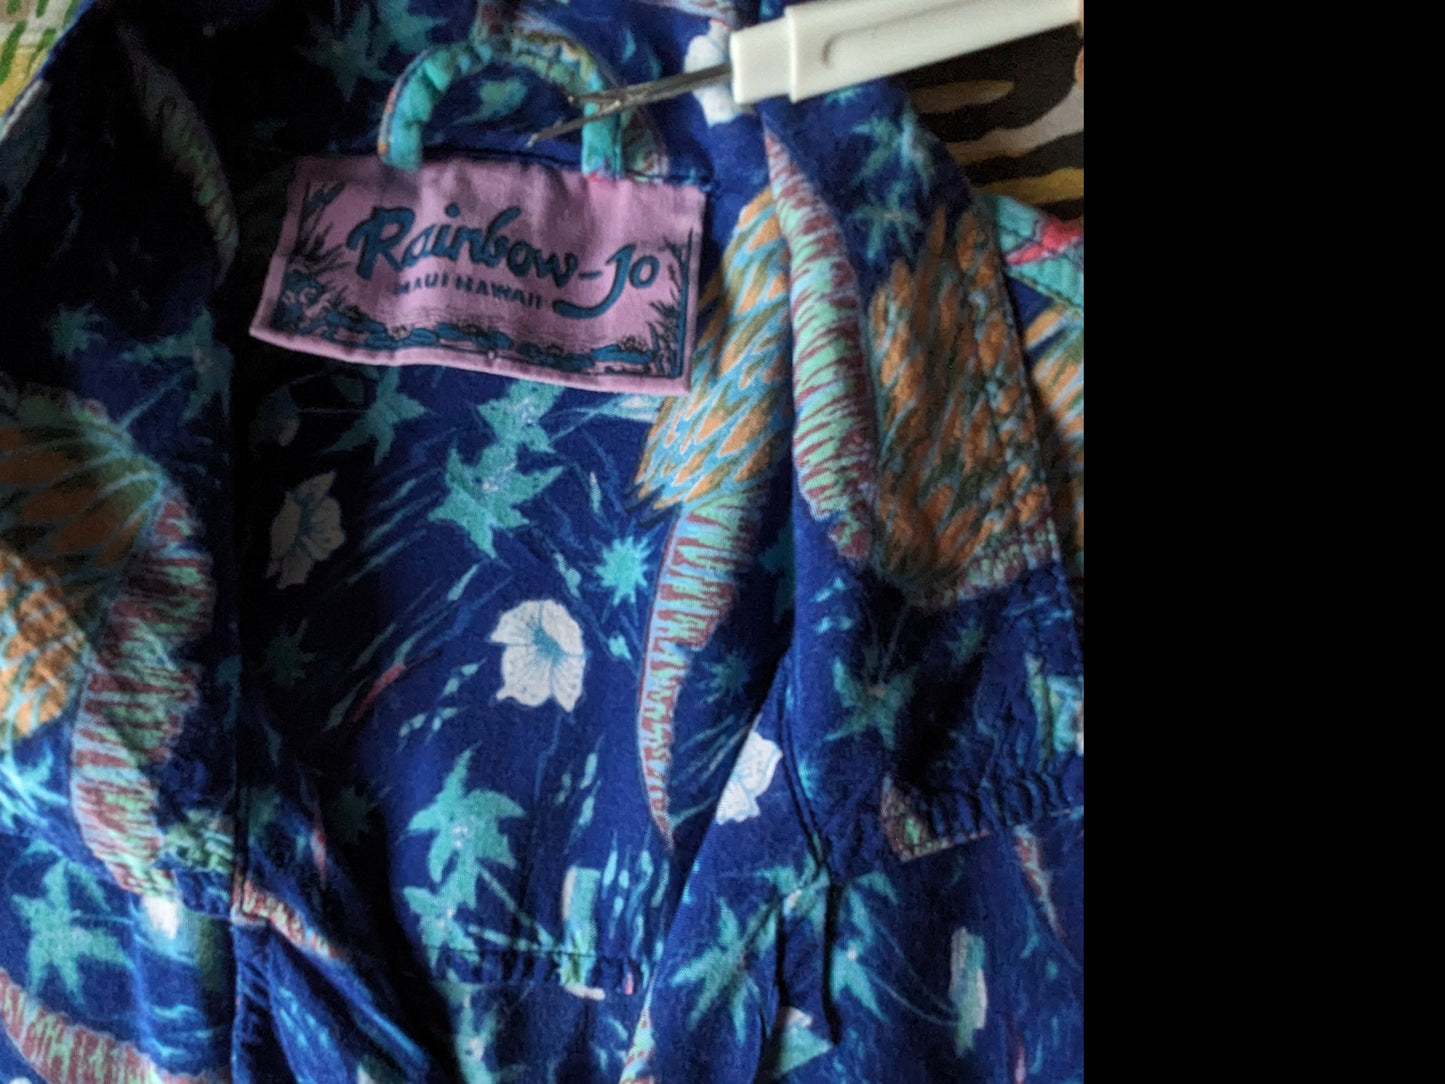 Rainbow Jo Maui origineel Hawaii overhemd korte mouw. Blauw oranje roze groene print. Maat XL.